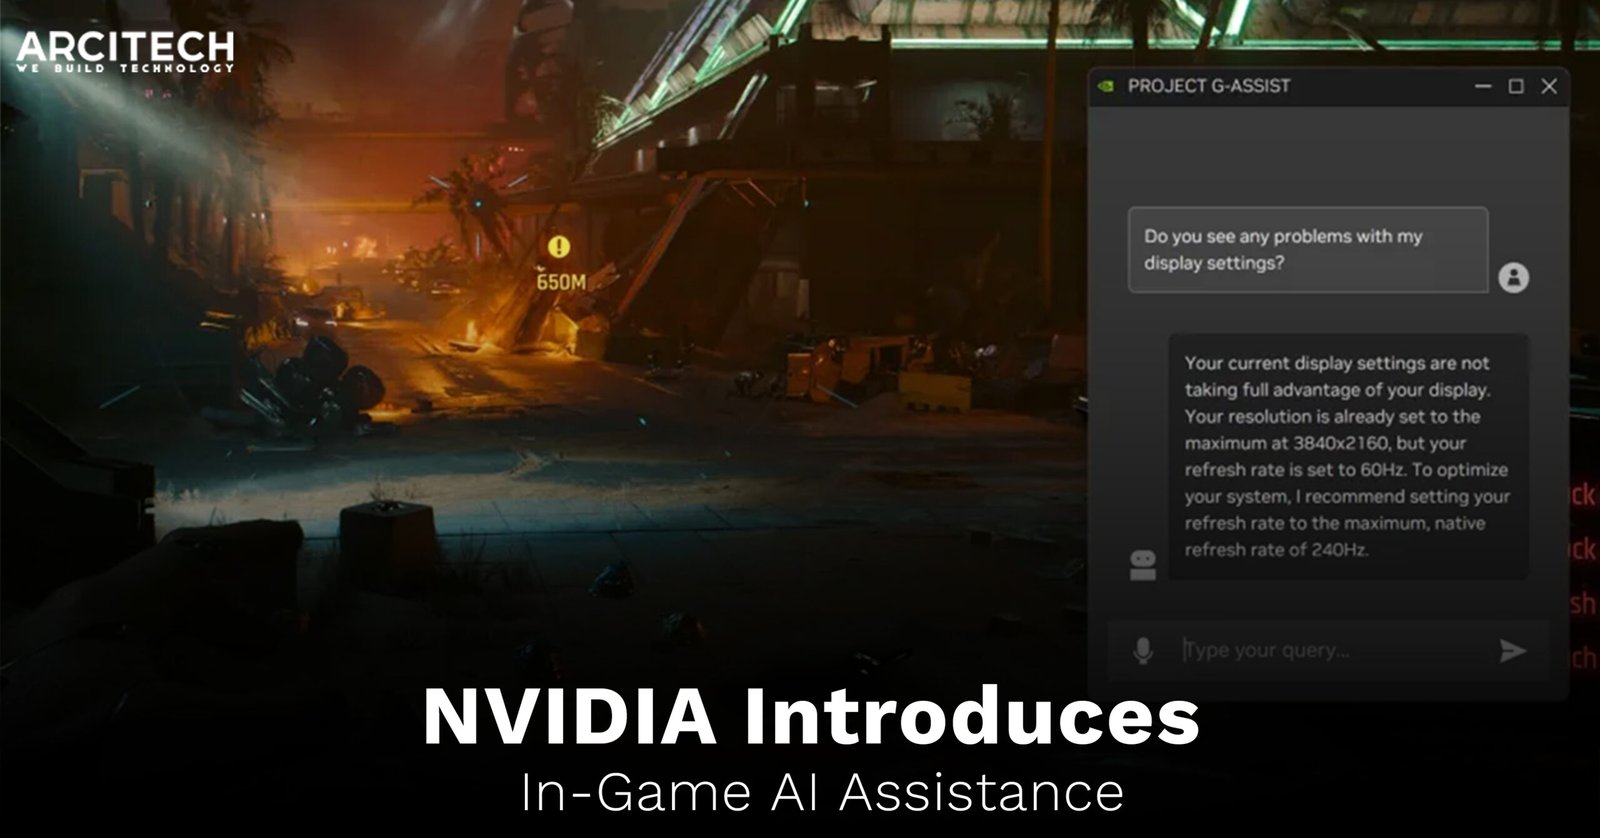 NVIDIA's G-Assist AI chatbot providing display optimization tips in a gaming environment, enhancing the gaming experience